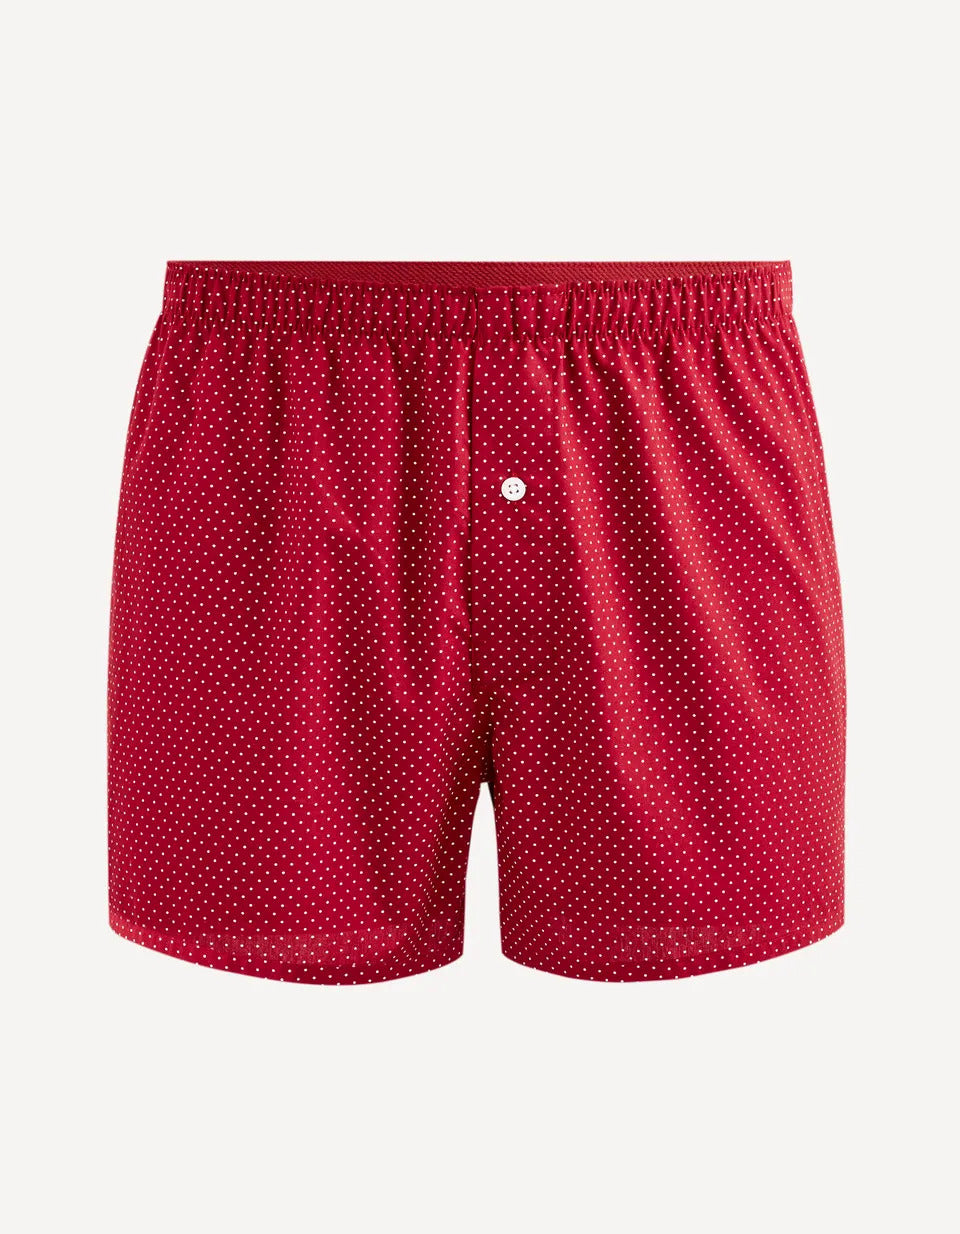 100% Cotton Poplin Boxer Shorts With Polka Dots - Burgundy - 01